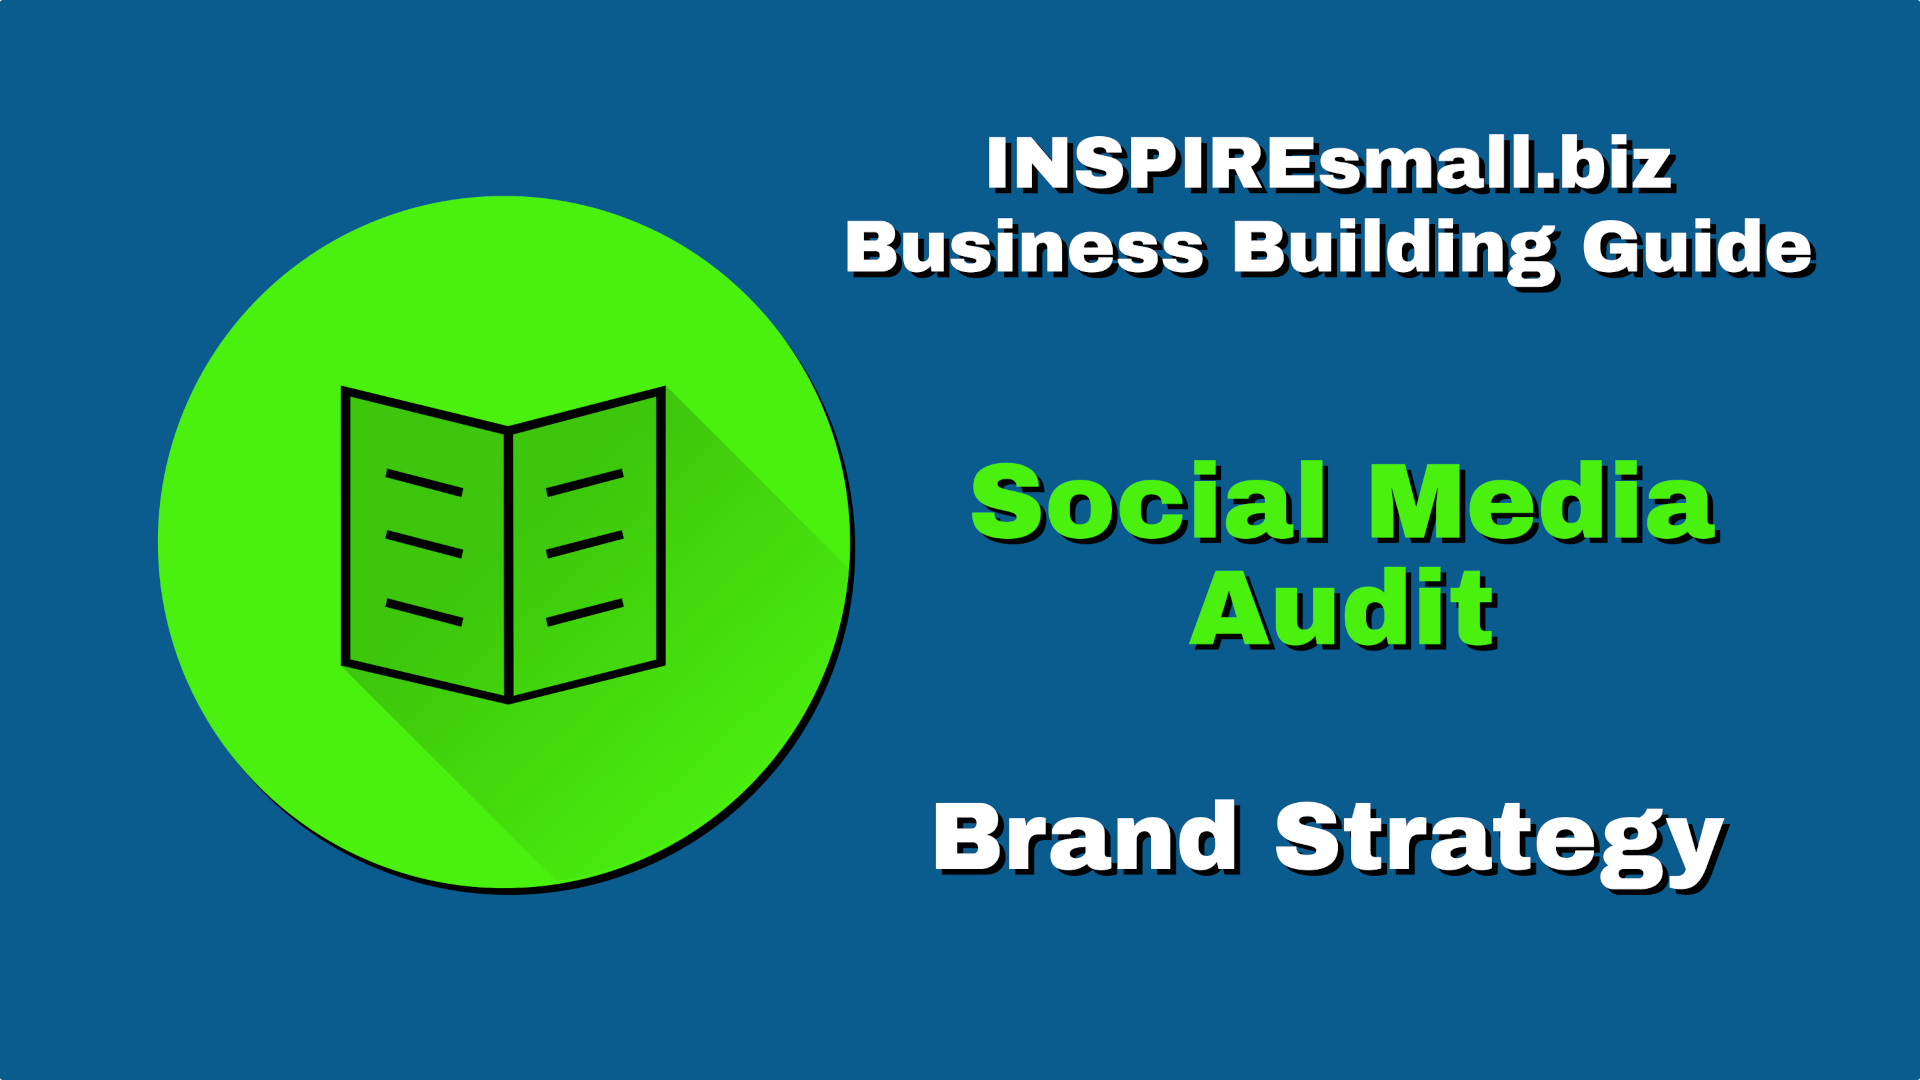 INSPIREsmall.biz Business Building Guide - Brand Strategy Section - Social Media Audit